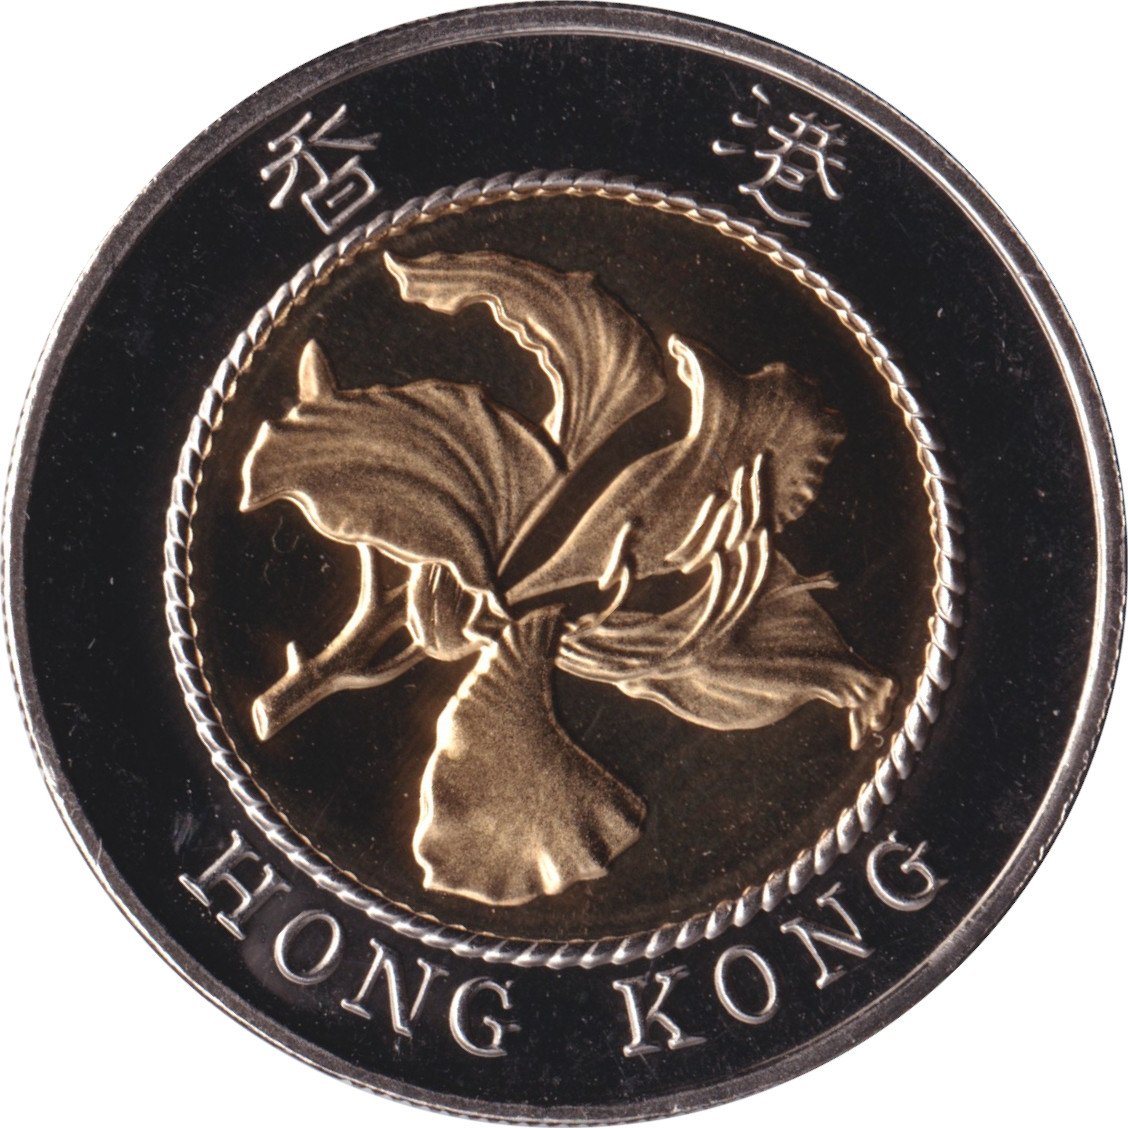 10 dollars - Rétrocession de Hong Kong